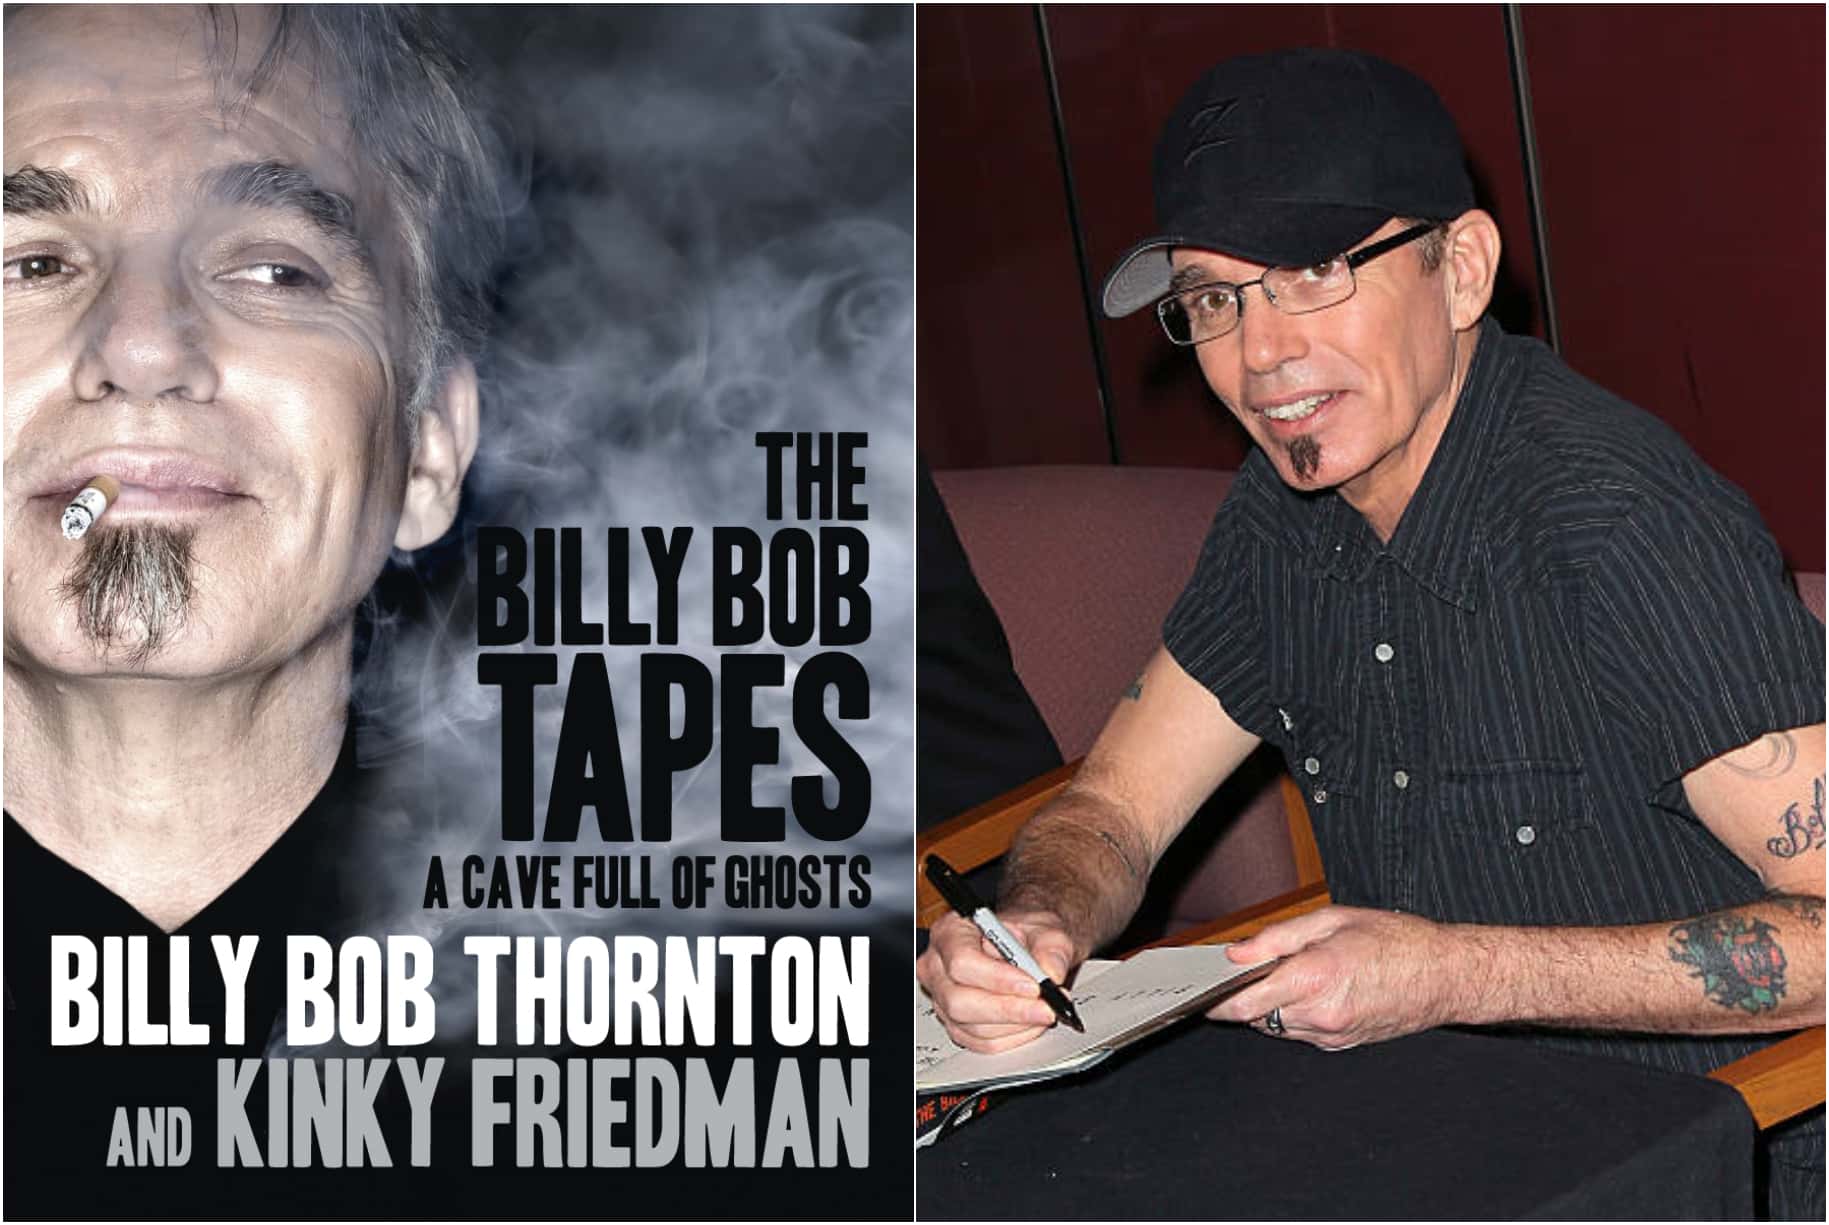 Billy Bob Thornton facts